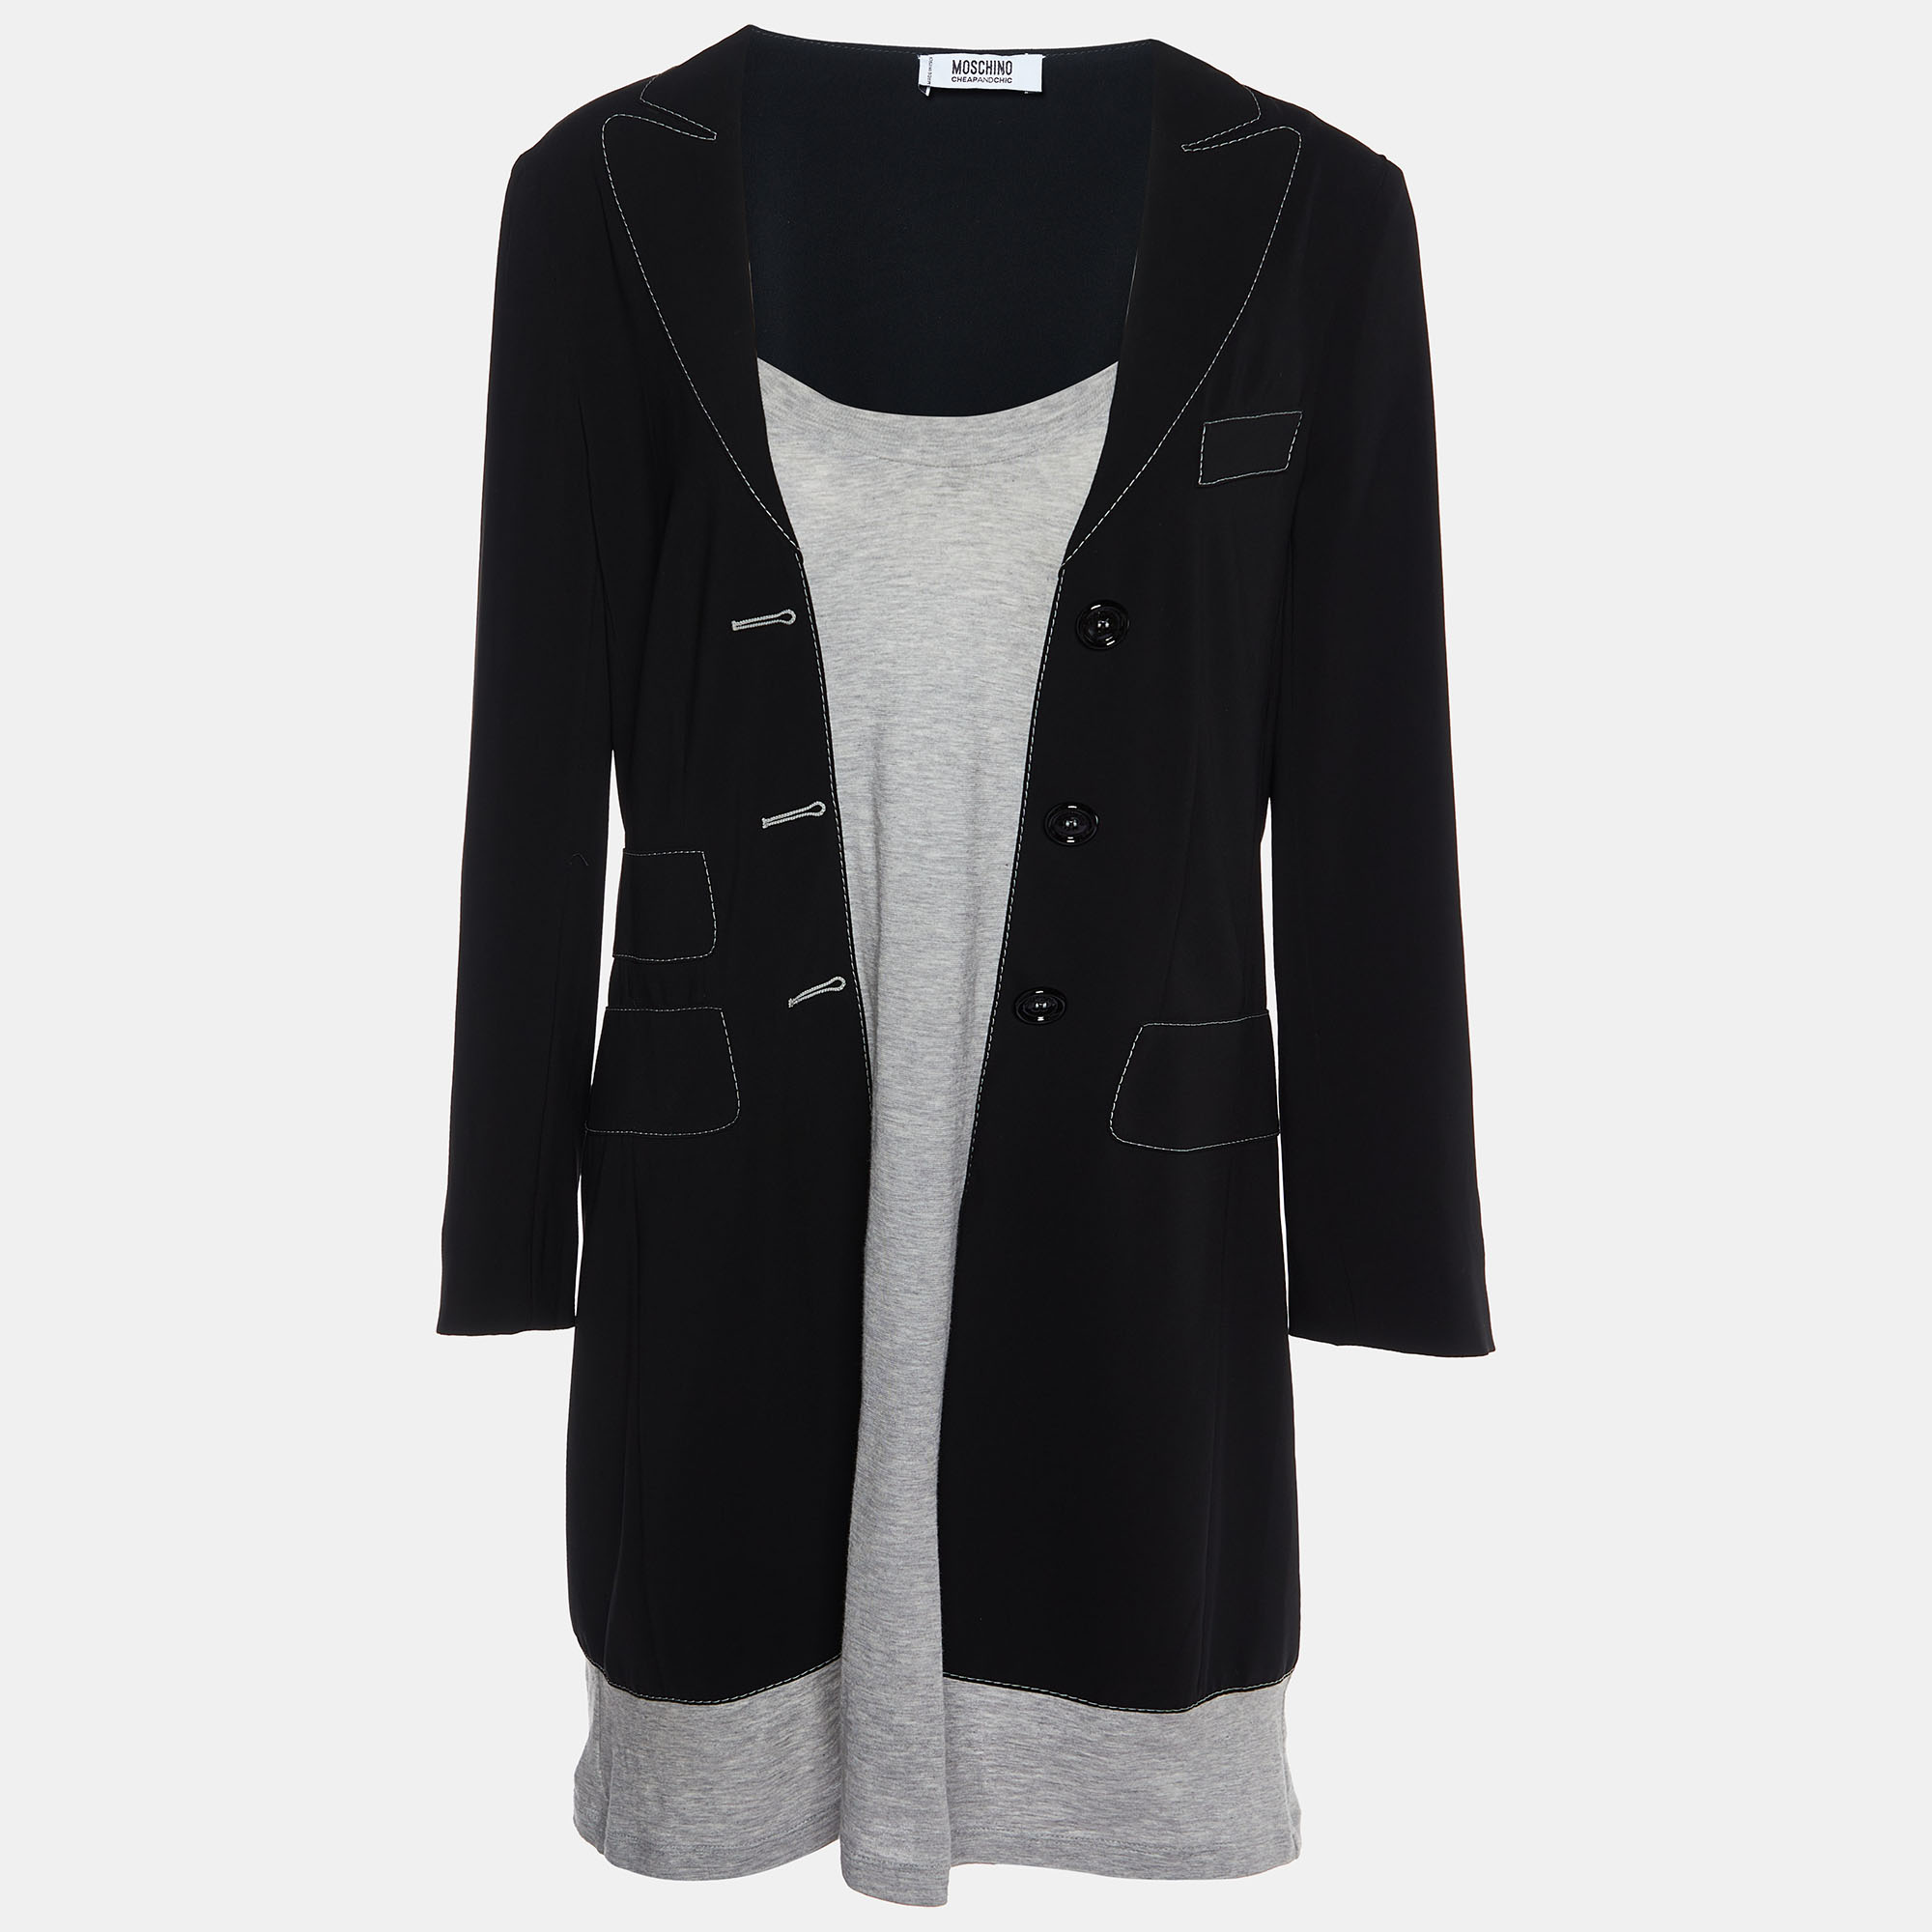 

Moschino Cheap and Chic Black Crepe & Cotton Knit Blazer Style Mini Dress